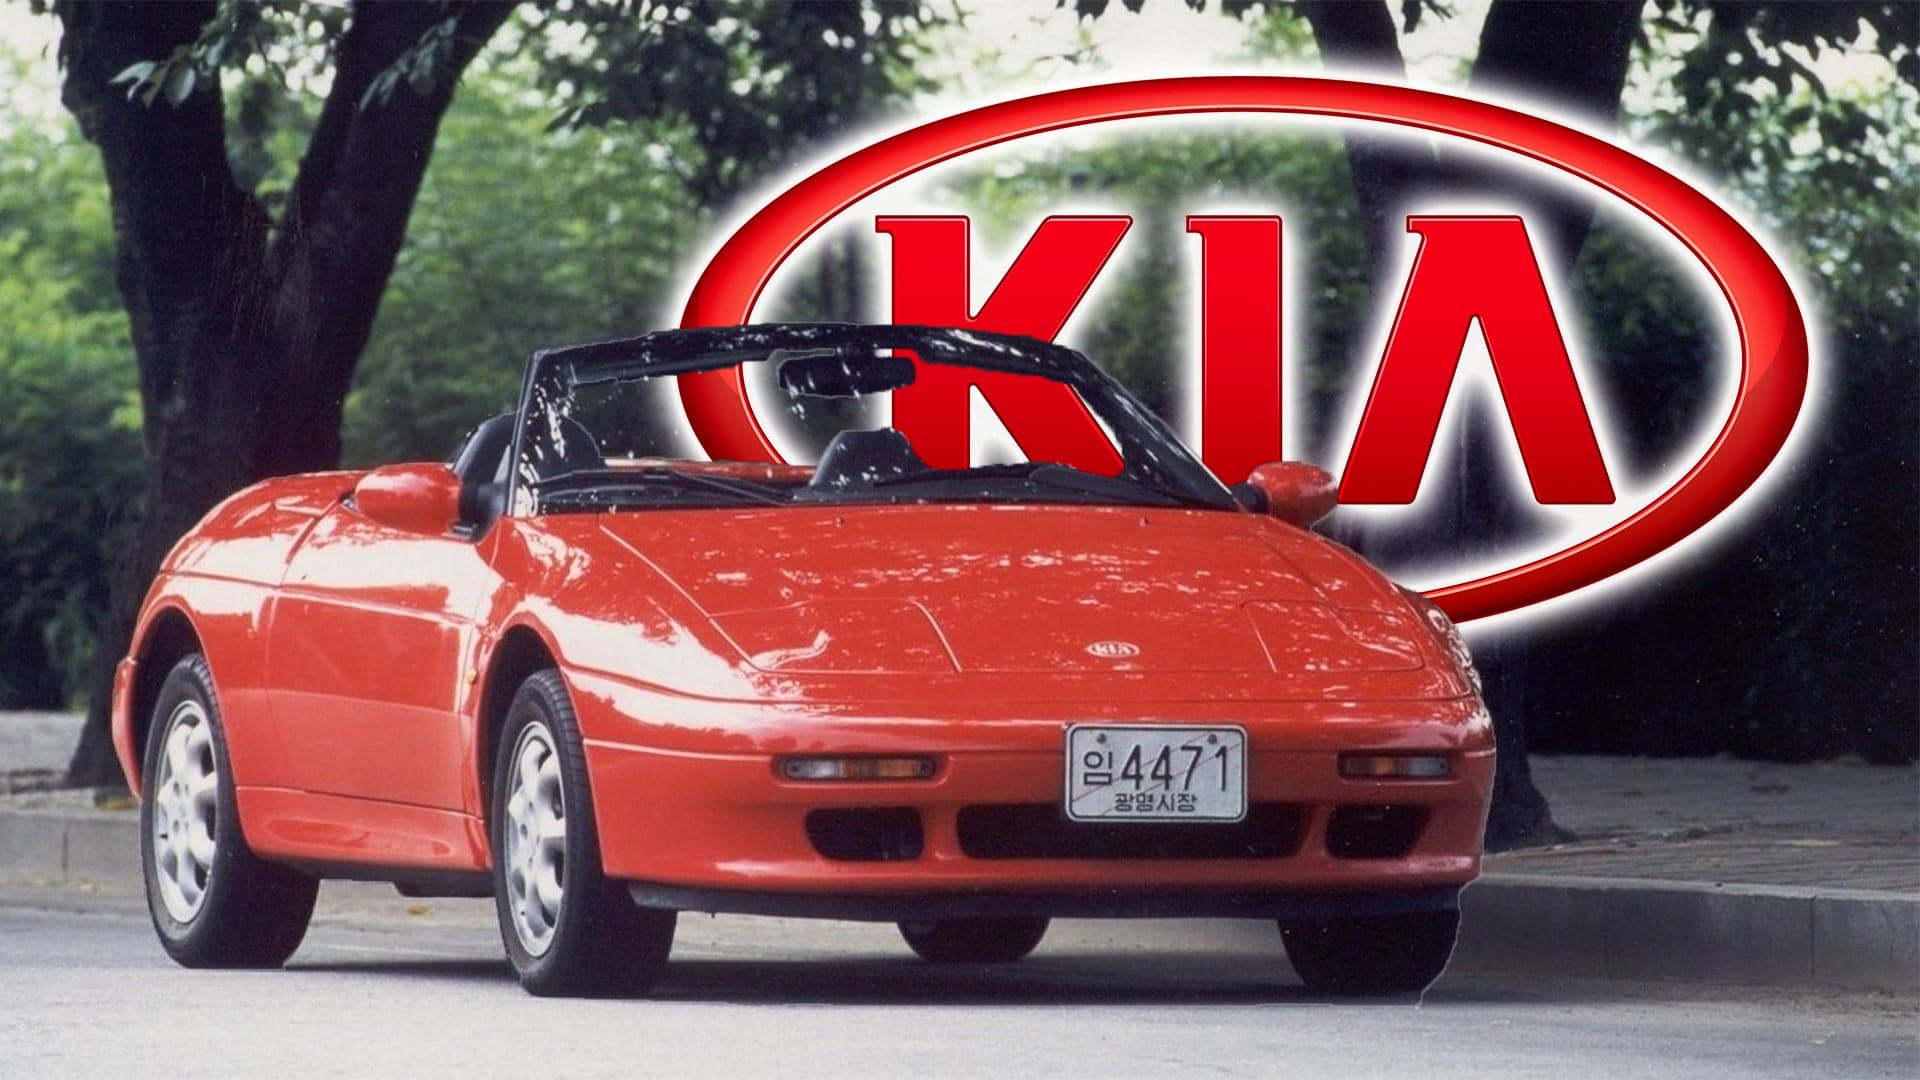 Did You Know Kia Used to Sell a Rebadged Lotus Elan?